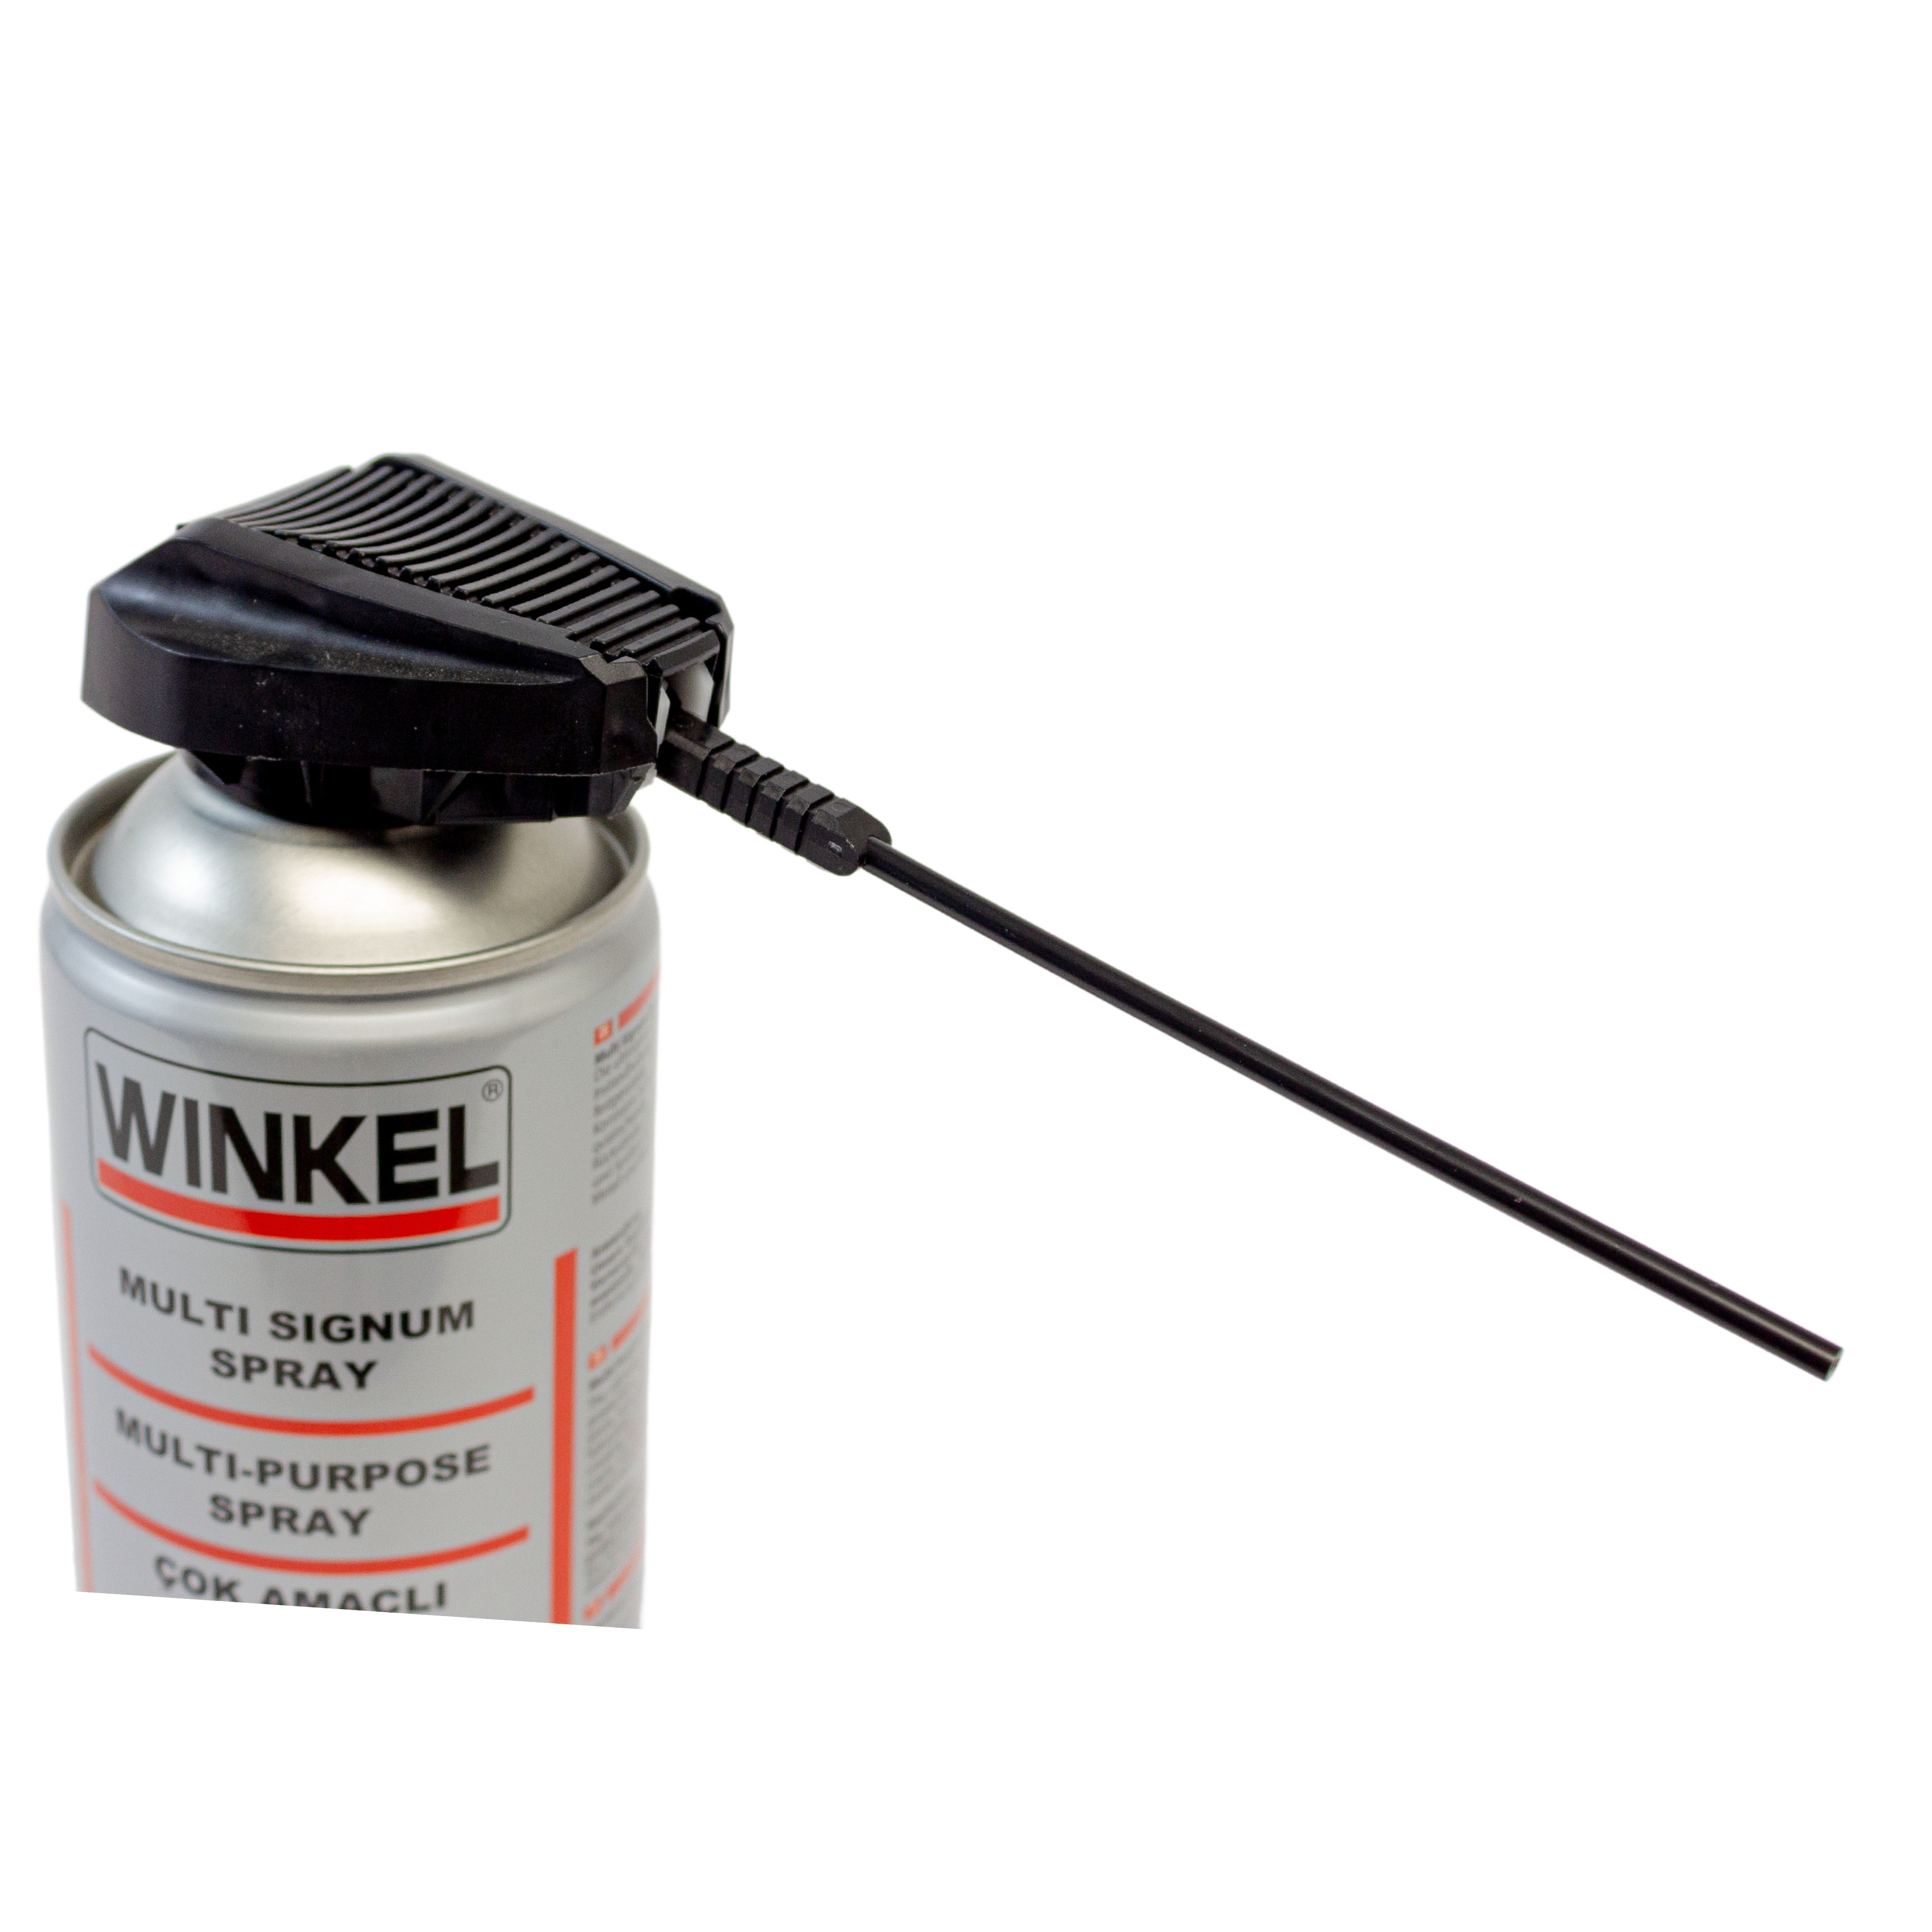 Winkel Multi Signum Spray, 400 ml, IMPA 450821